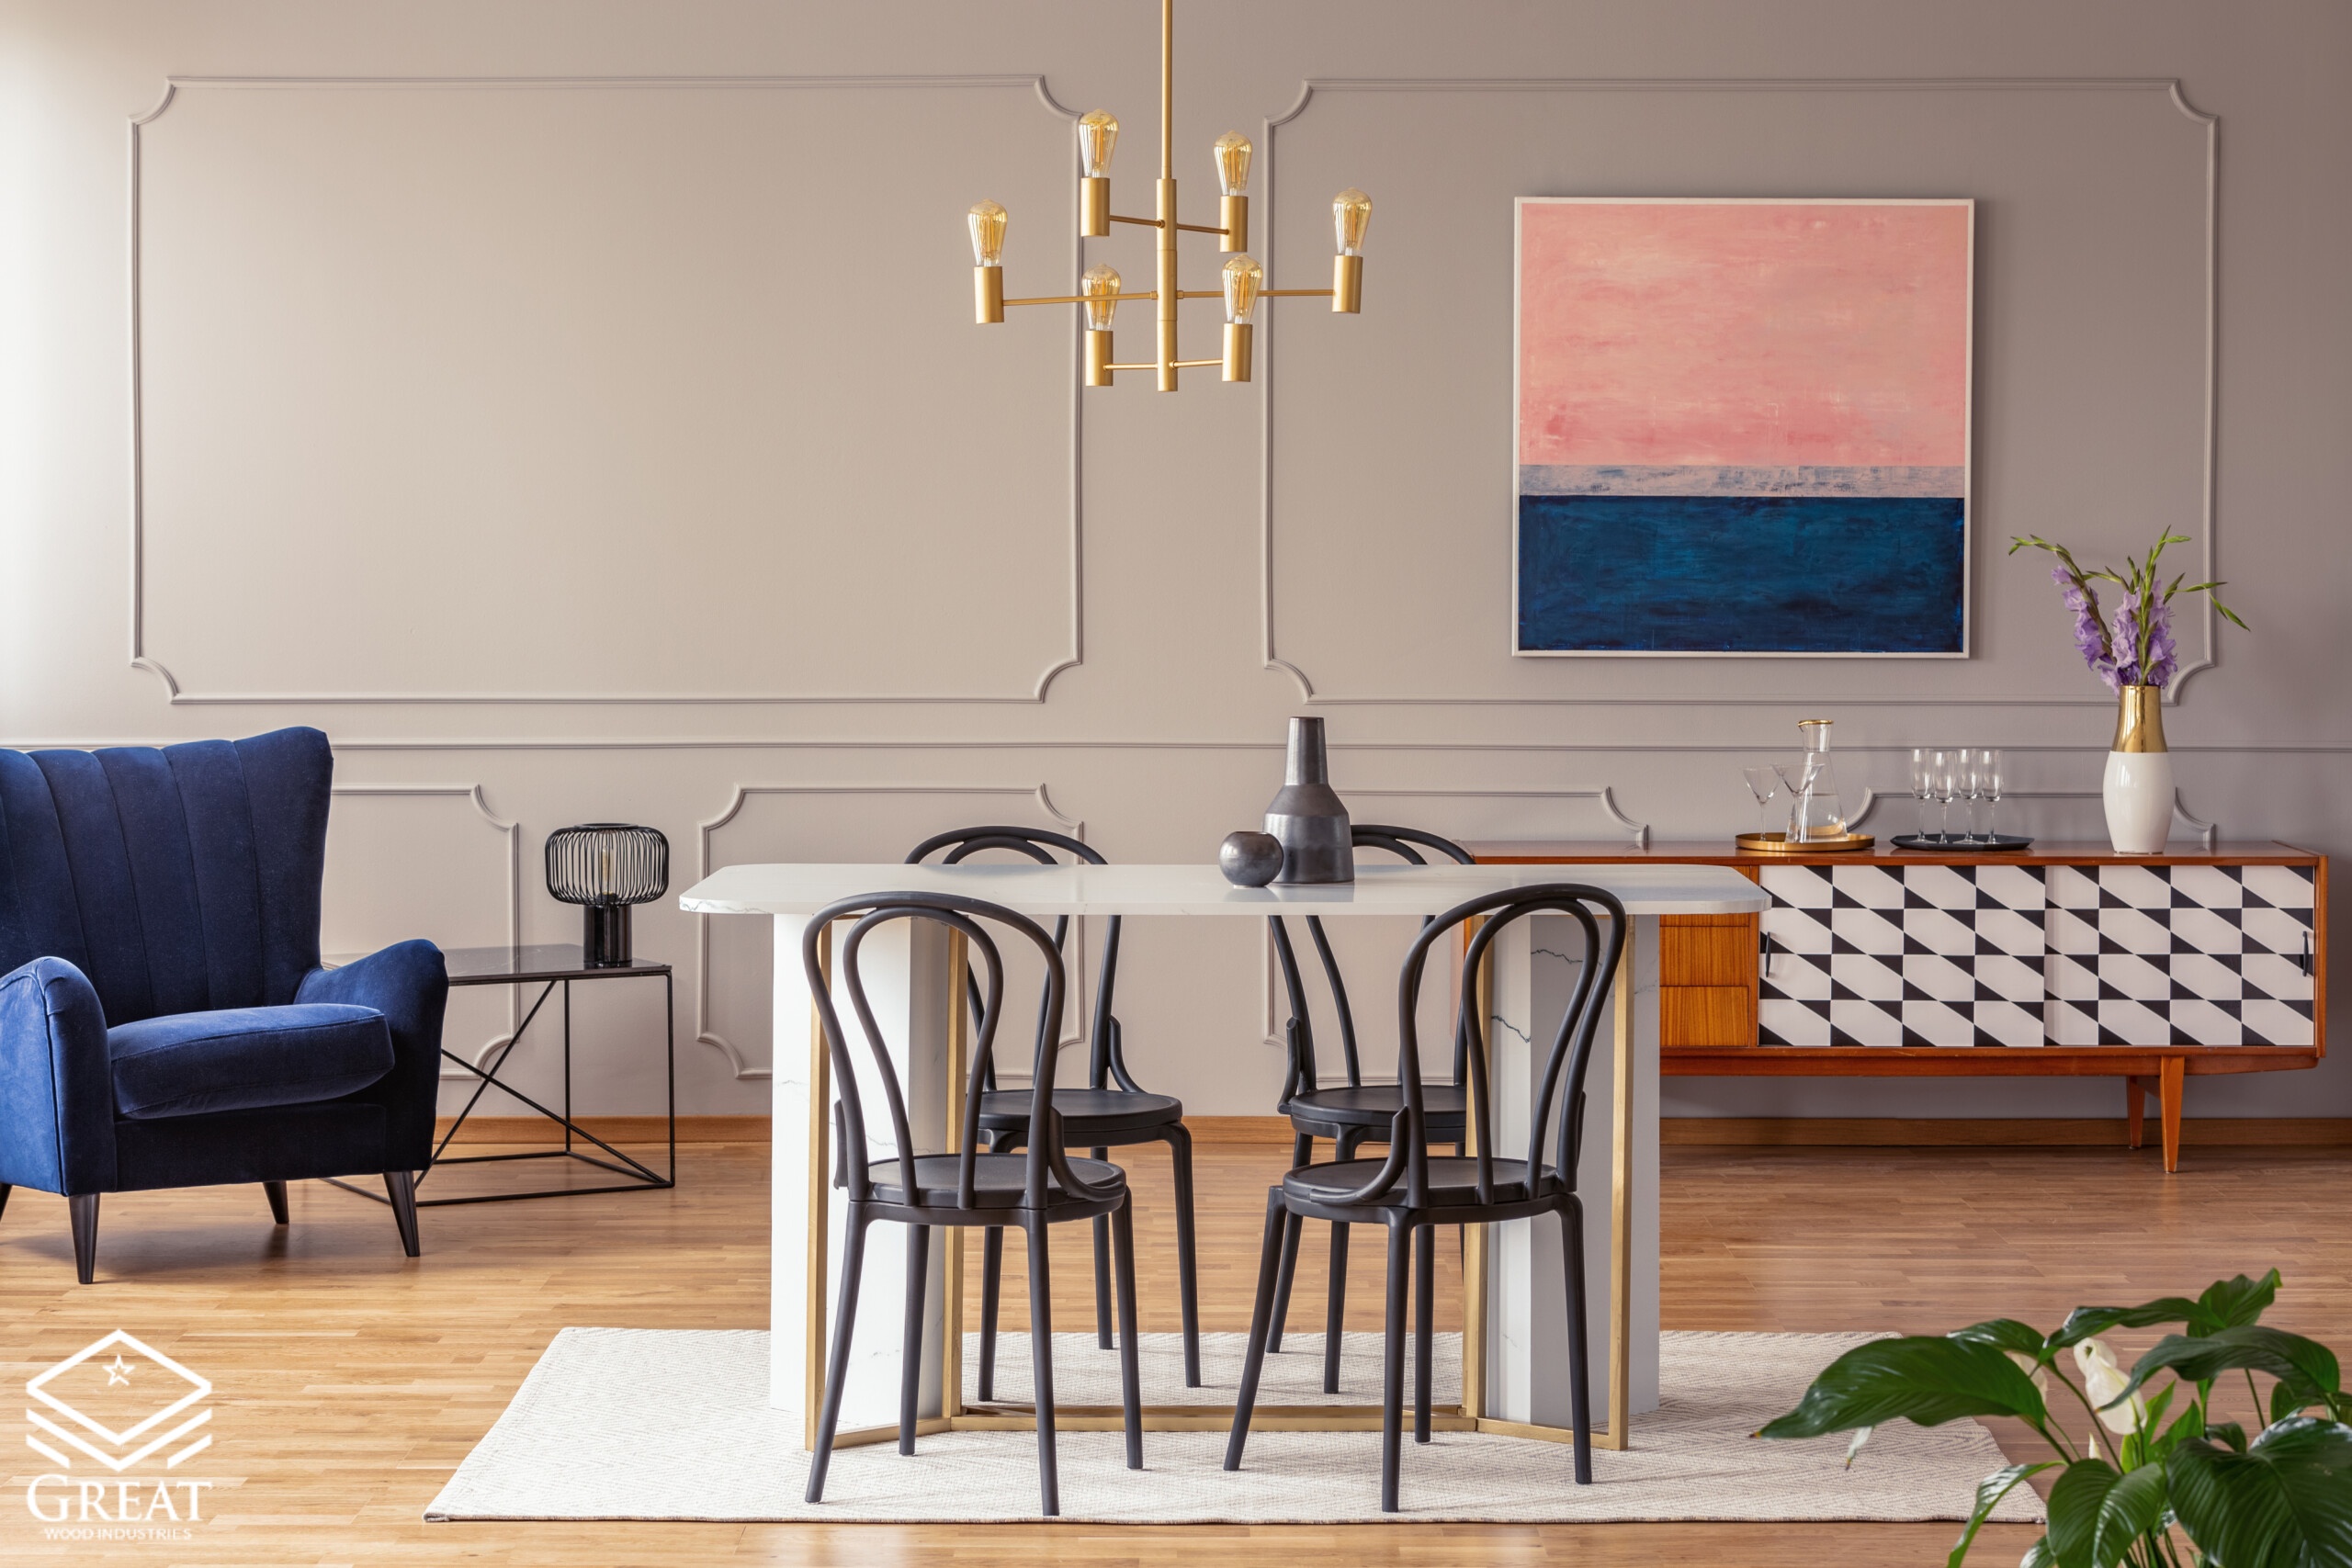 گریت کابینت | شرکت کابینت آشپزخانه گریت | eclectic interior design scaled 1